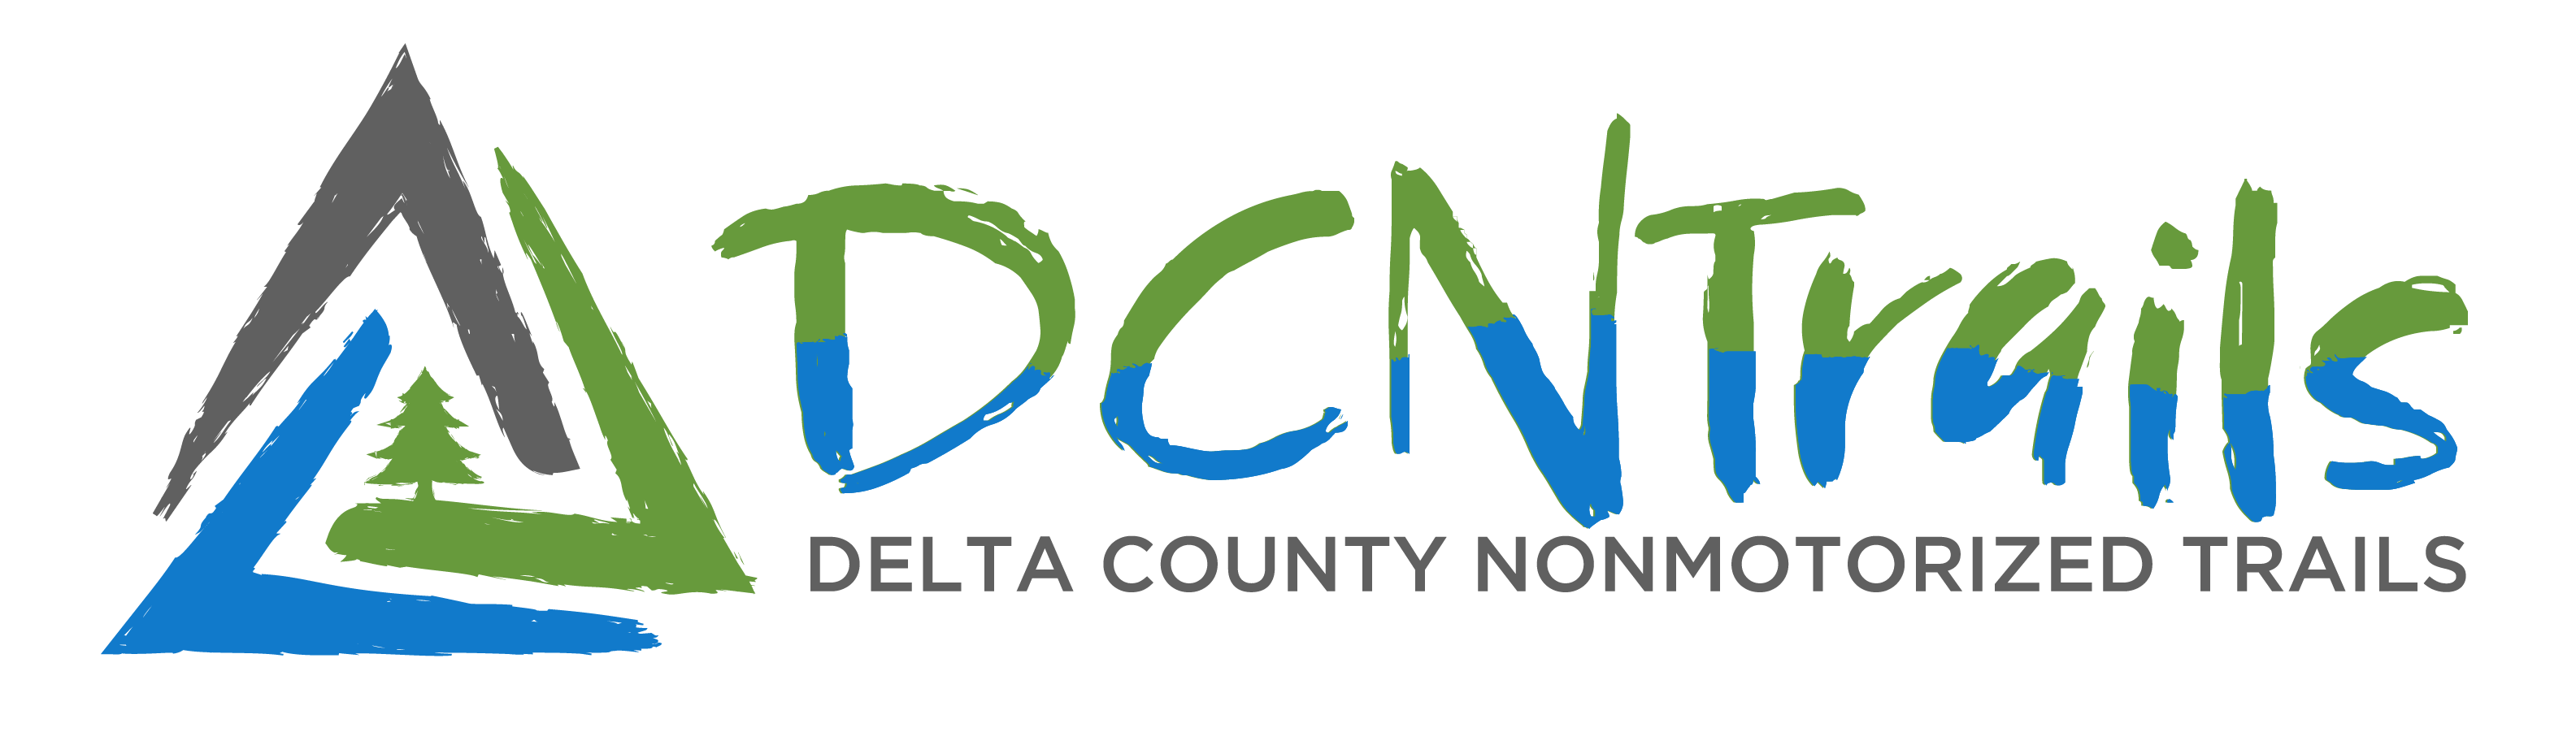 Delta County Nonmotorized Trails